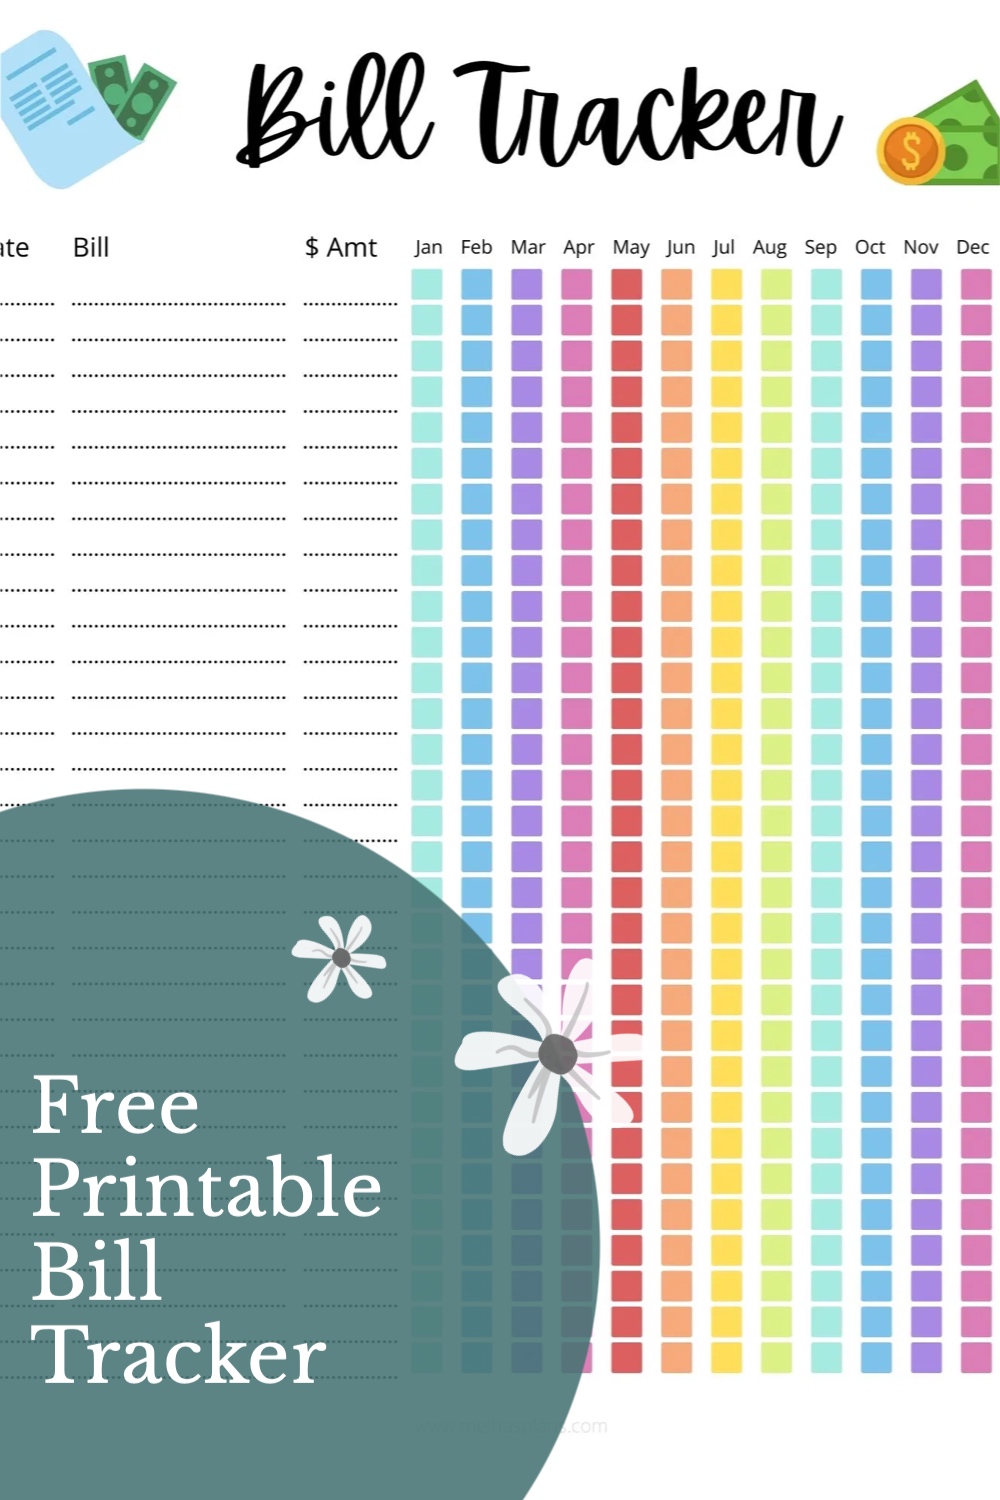 free-printable-bill-tracker-download-melhasplans